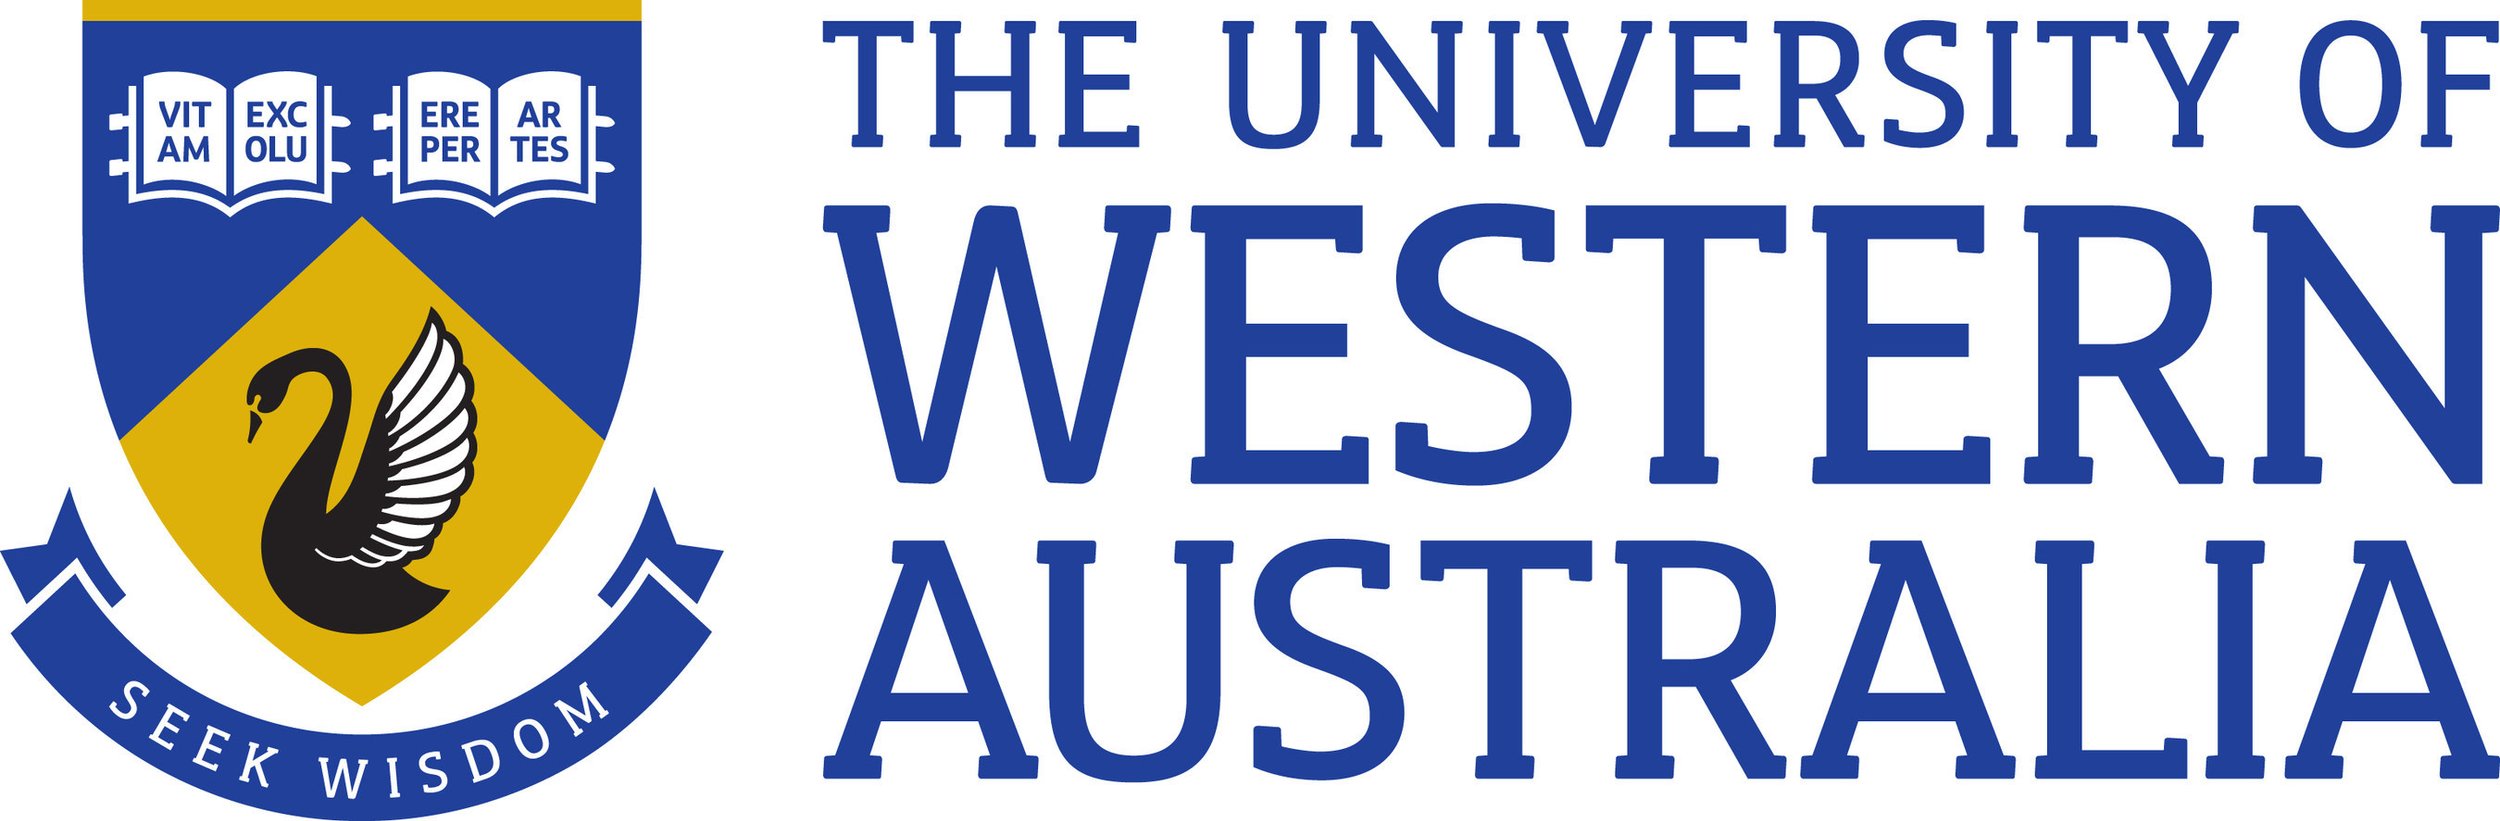 University of Western Australia.jpg